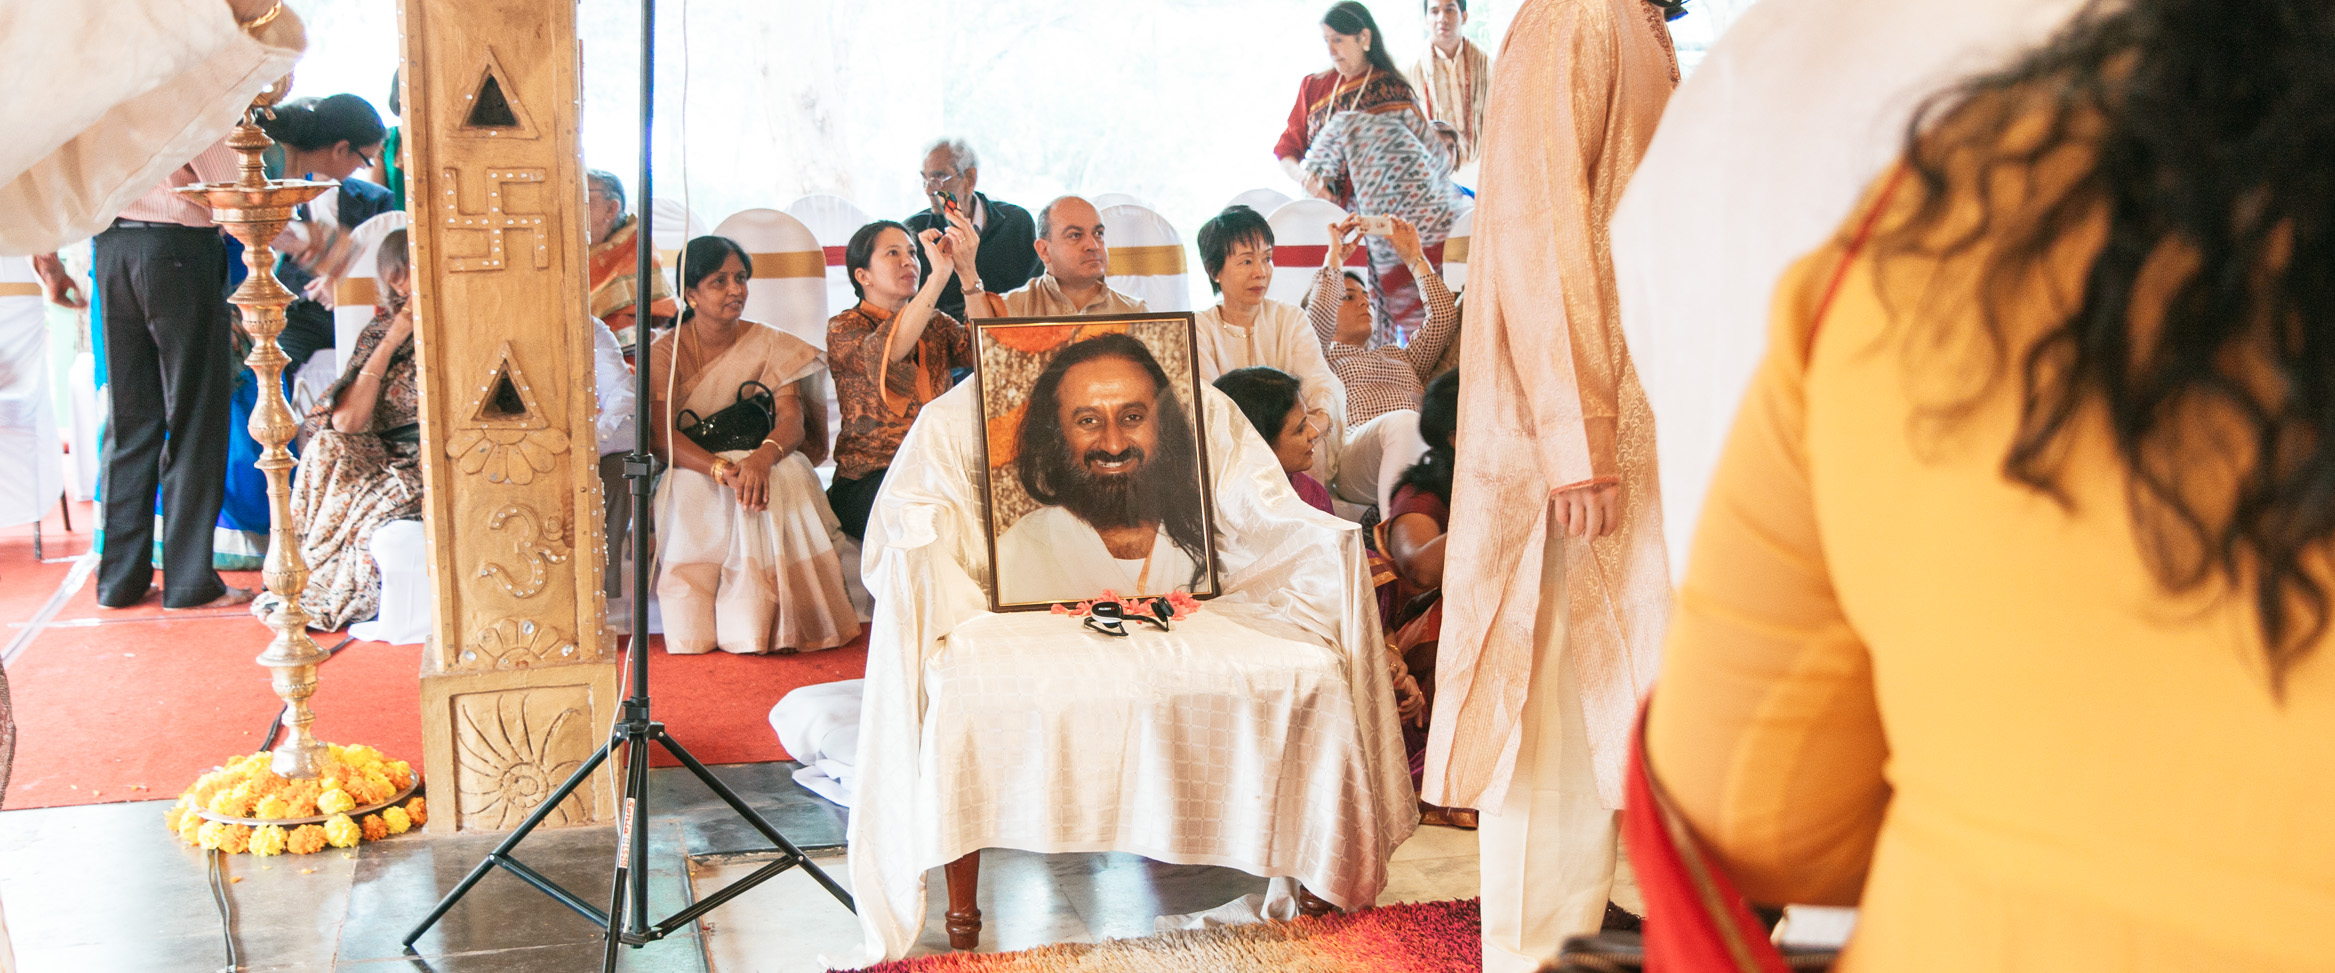 The Portrait of Sri Sri Ravi Shankar Watching Over the Wedding Ceremony